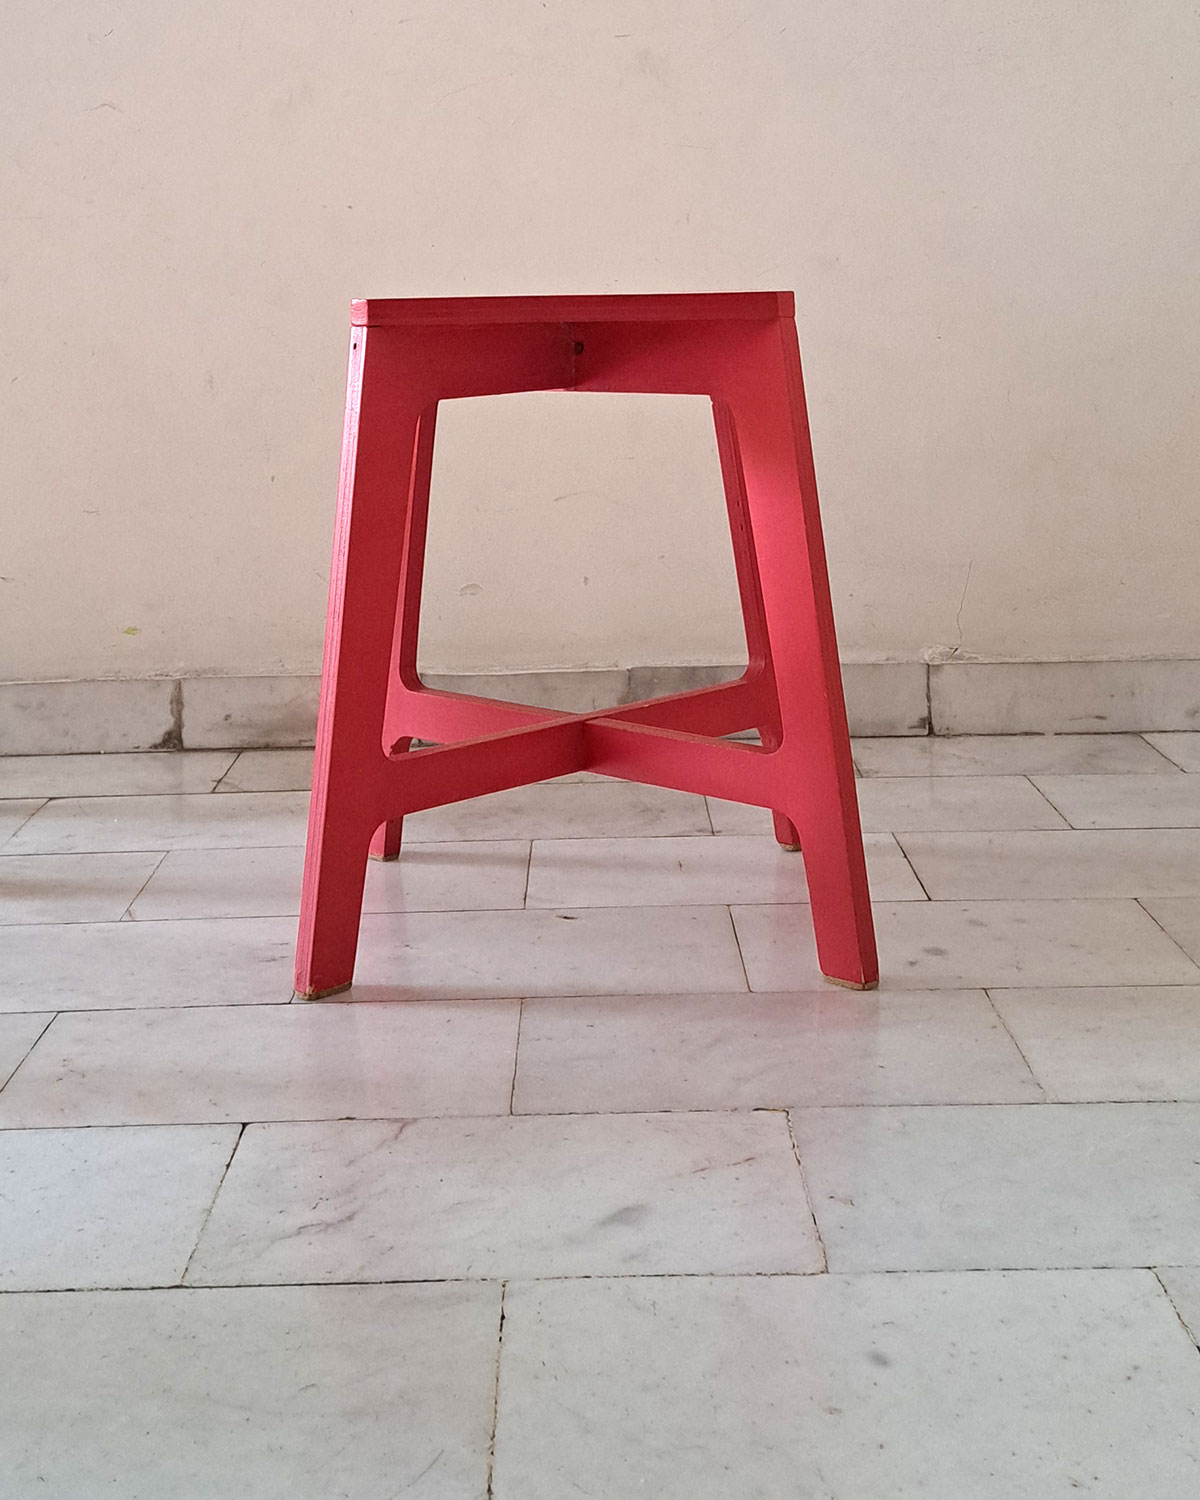 Plywood stool